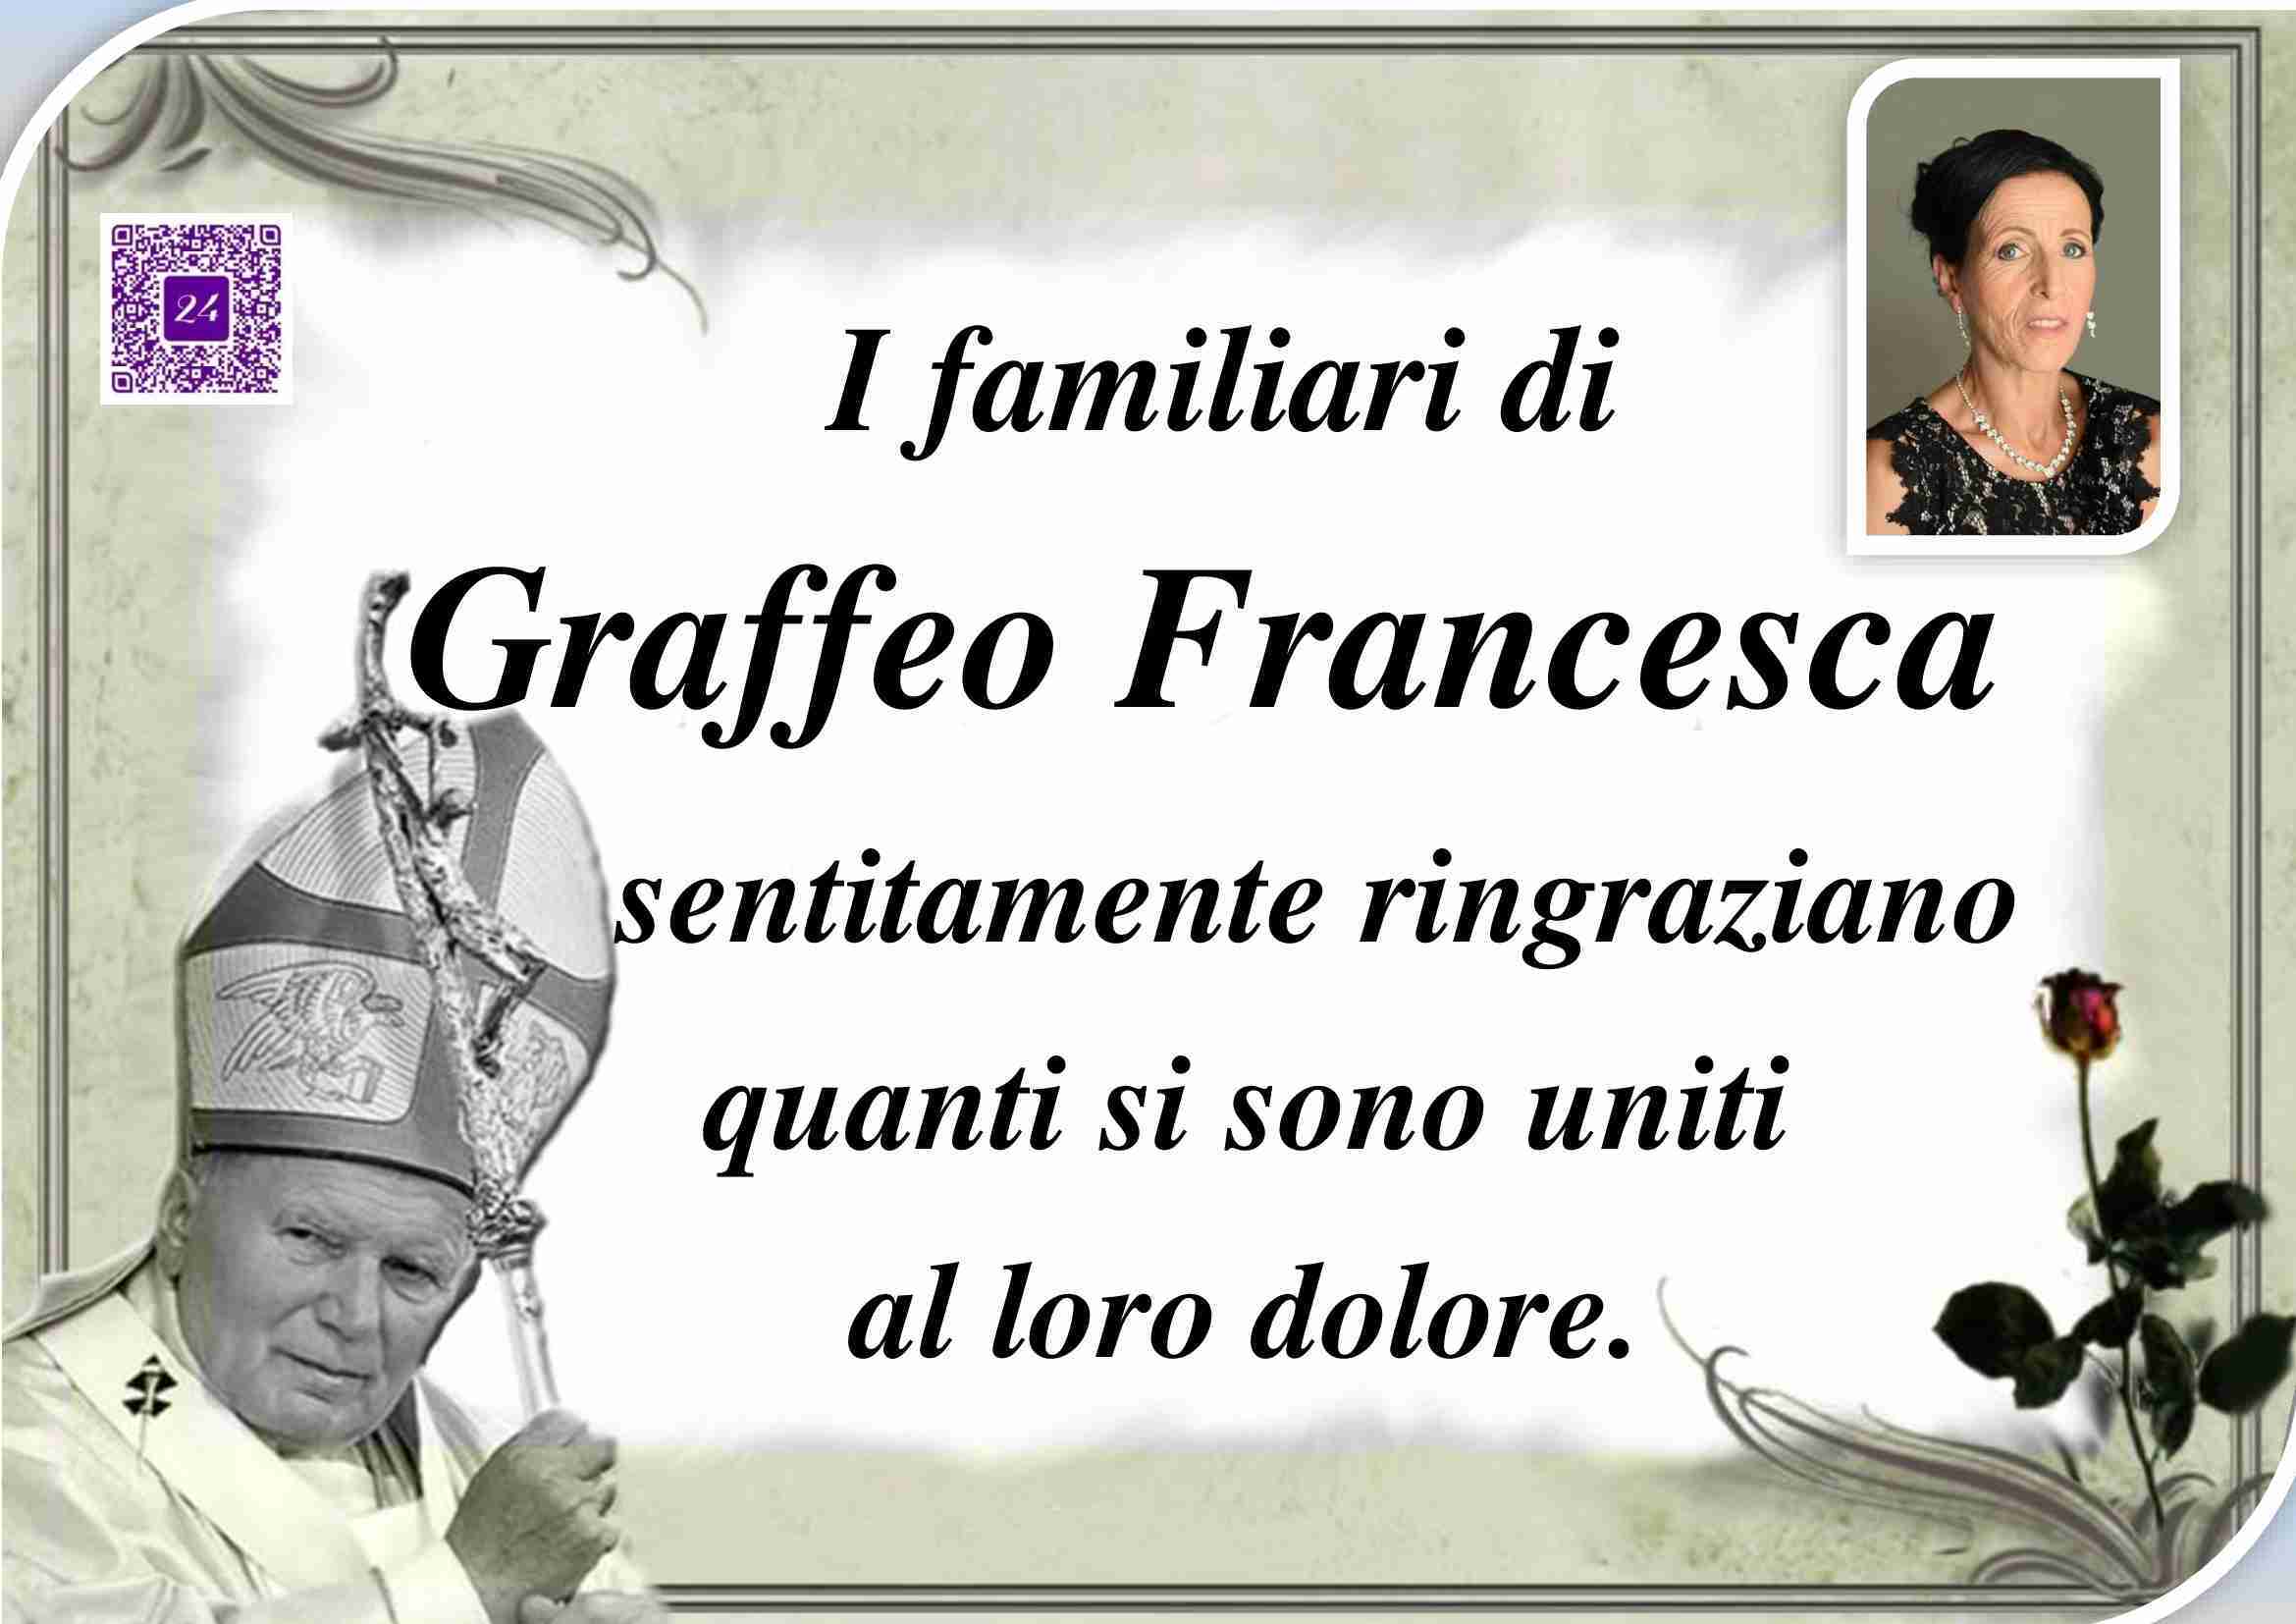 Francesca Graffeo